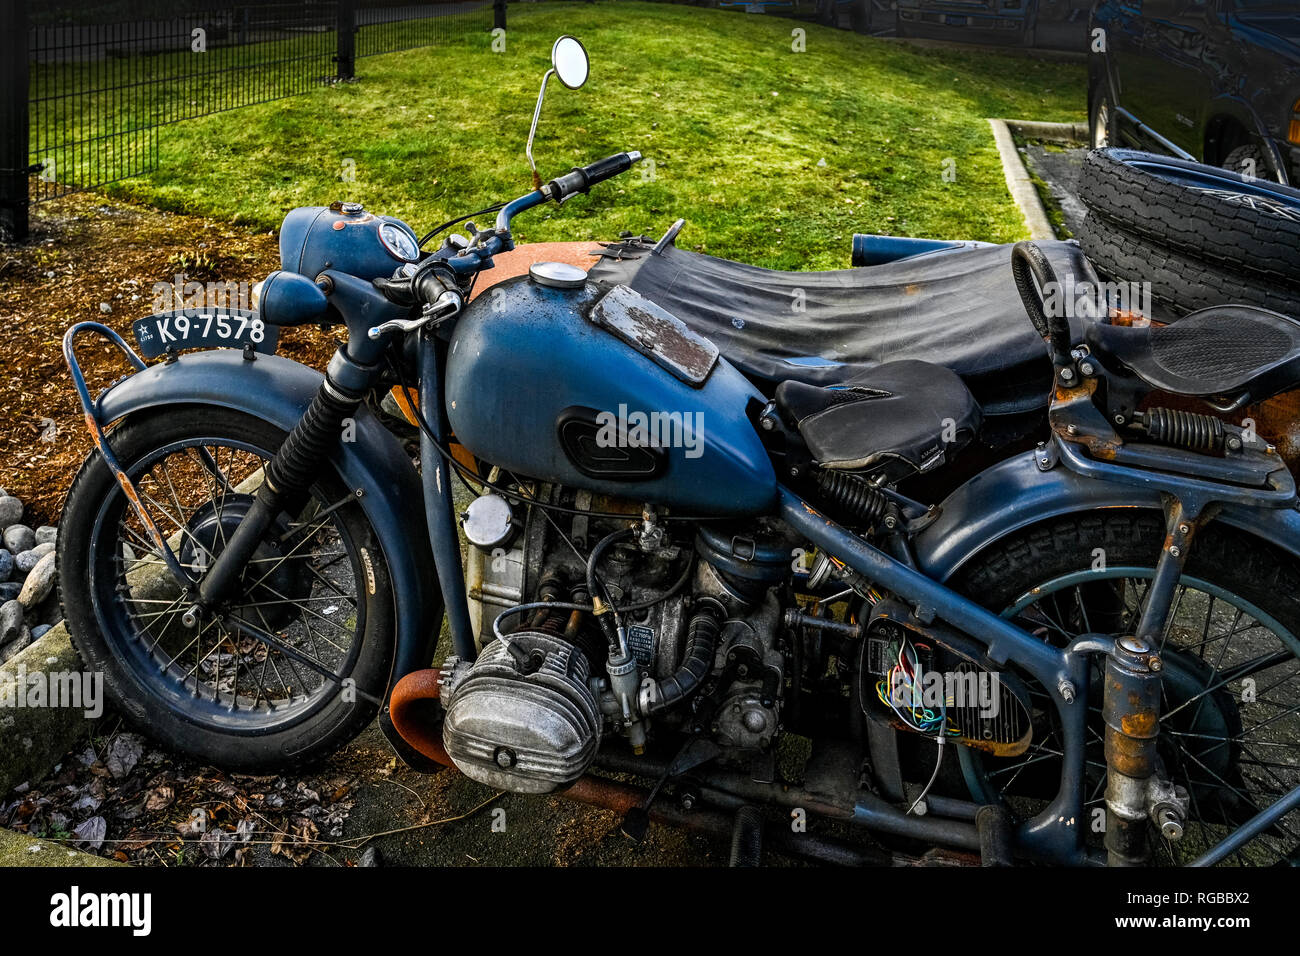 Kawasaki Motorcycle High Resolution Stock Photography and Images - Alamy